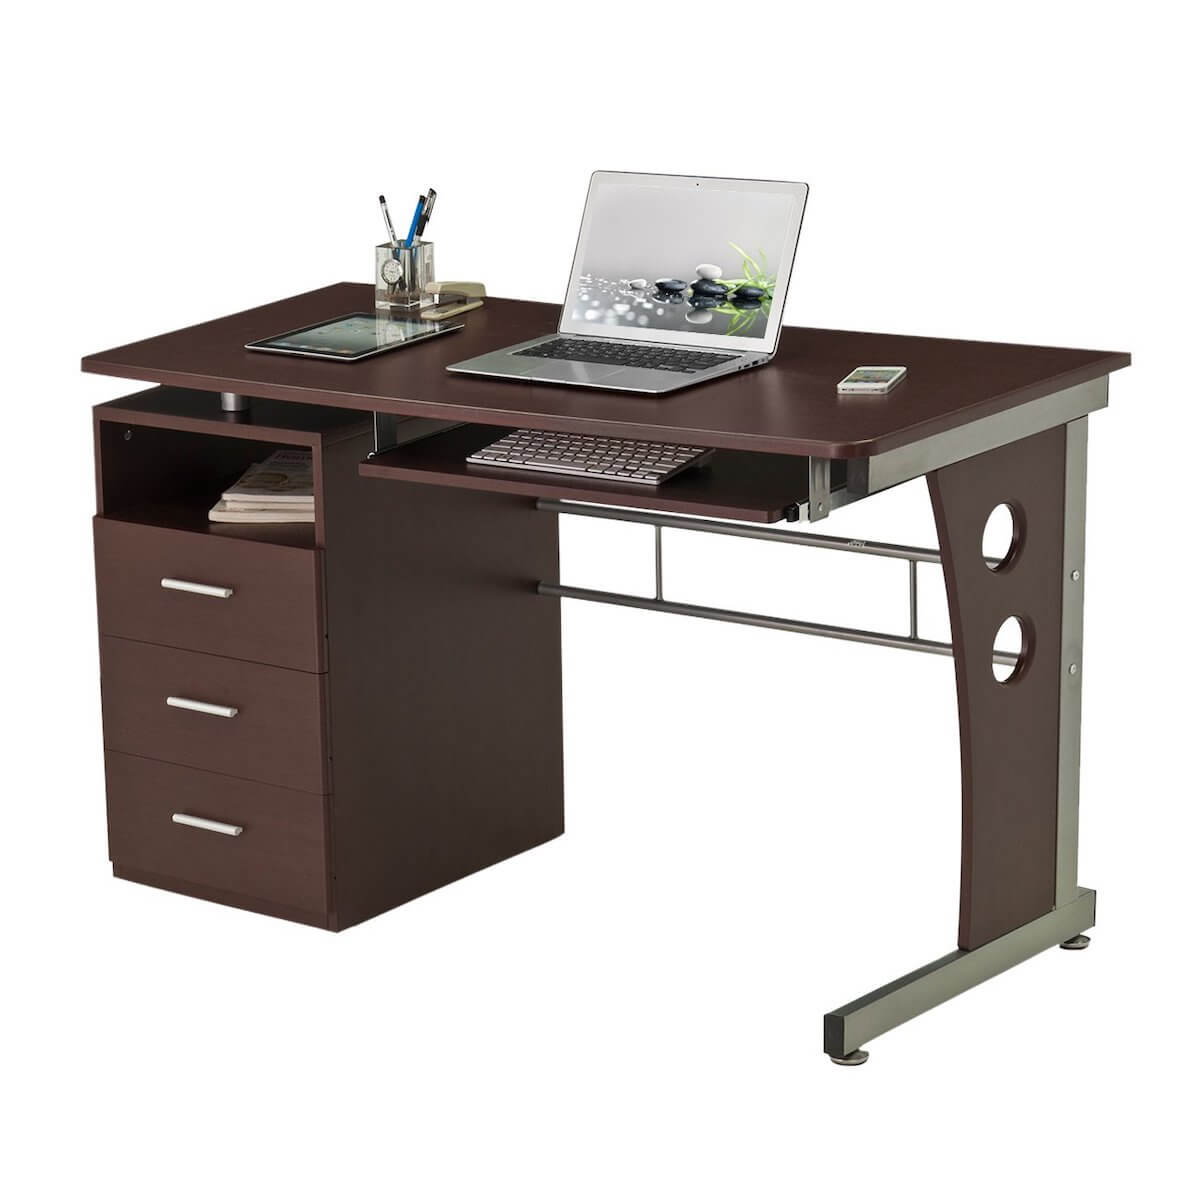 Techni Mobili Chocolate Computer Desk with Ample Storage RTA-3520-CH36 #color_chocolate